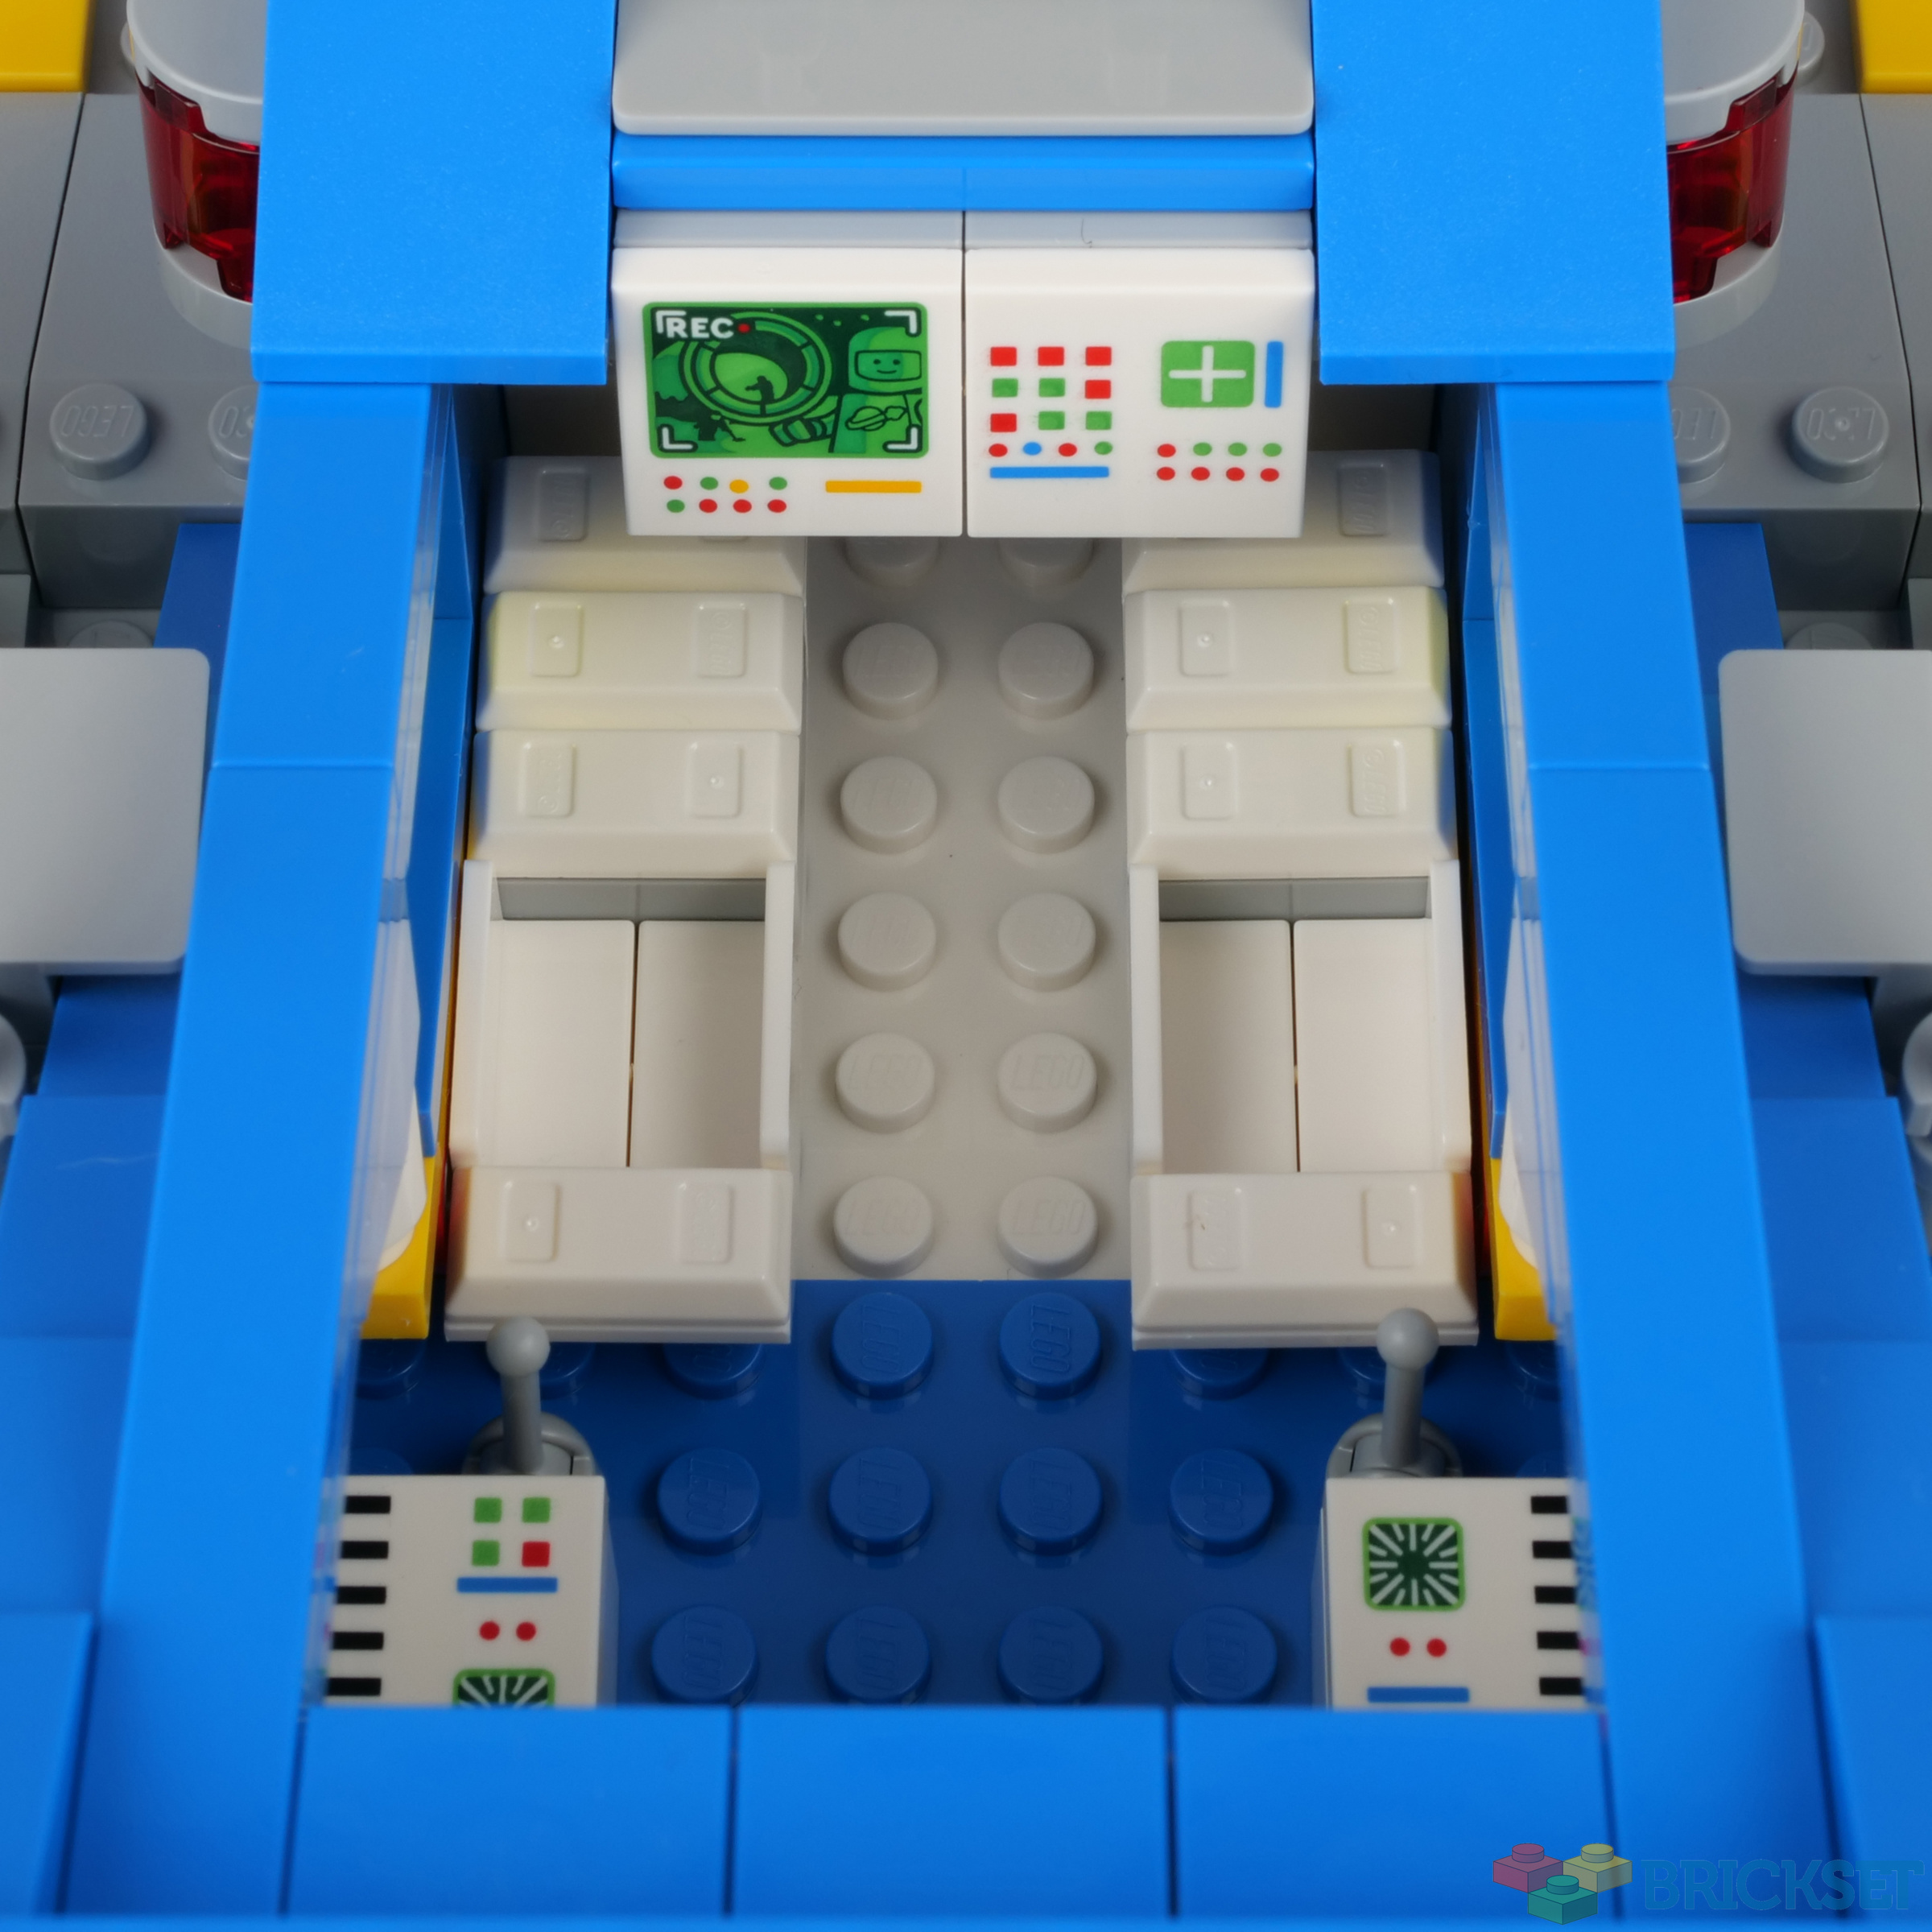 MOC] A college Main Building - Special LEGO Themes - Eurobricks Forums